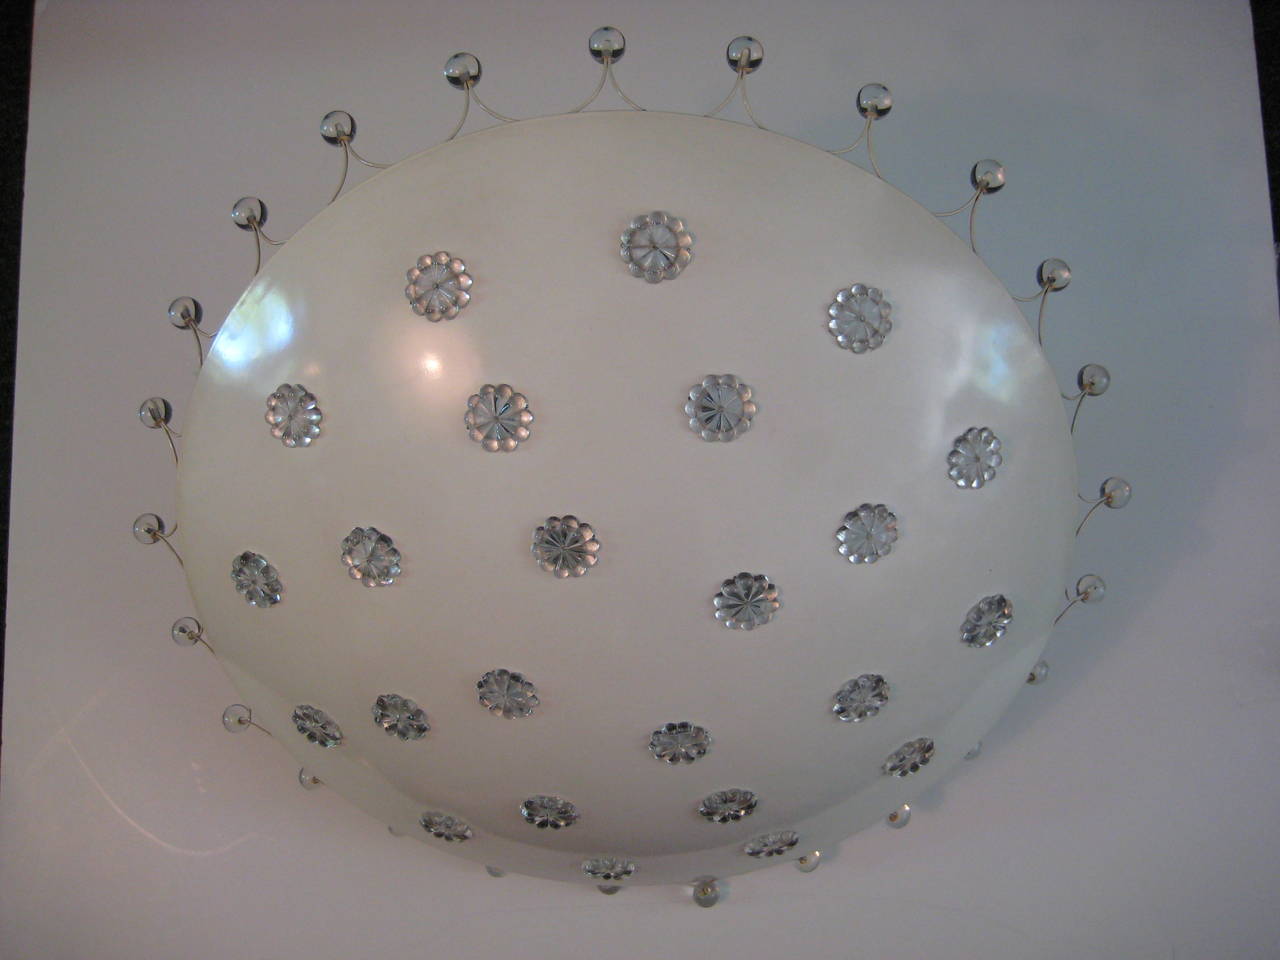 Mid-Century Modern 1950's  Flush Mount Ceiling Fixture With Unique Glass Details.